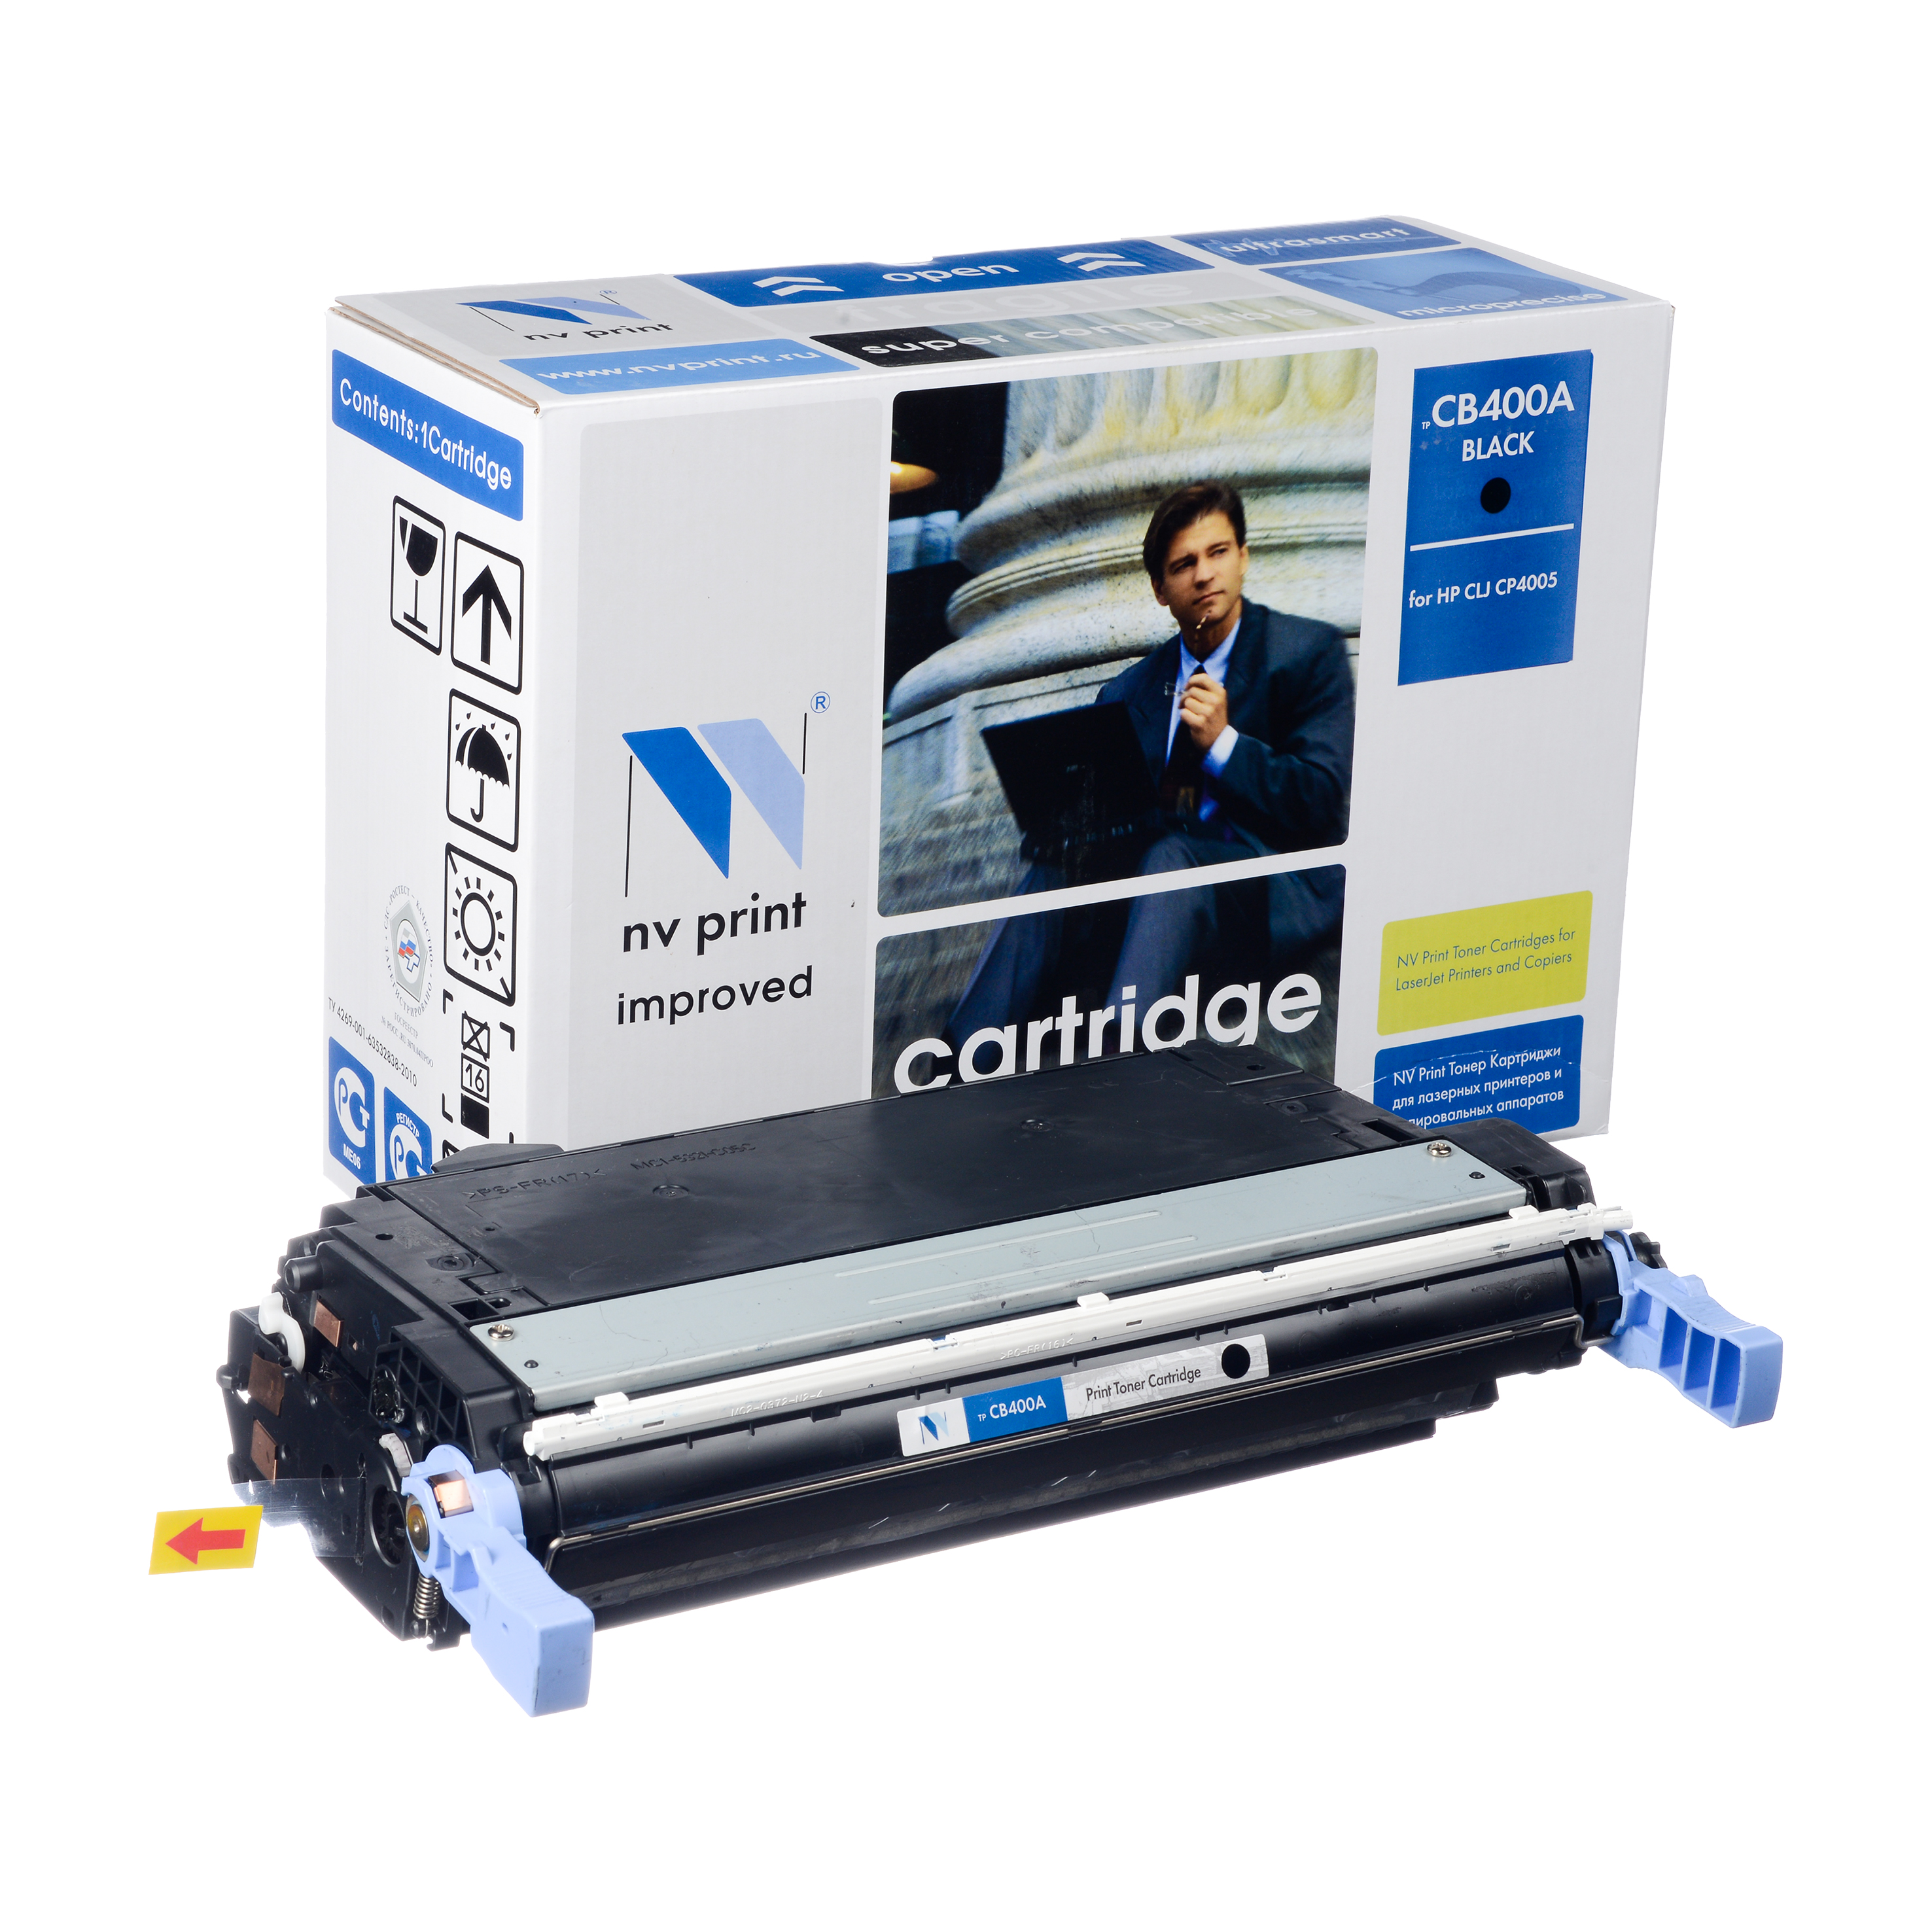 Картридж NV Print CB400A blackКартридж NV Print для HP Color LJ CP4005Картридж NV Print для HP Color LJ CP4005